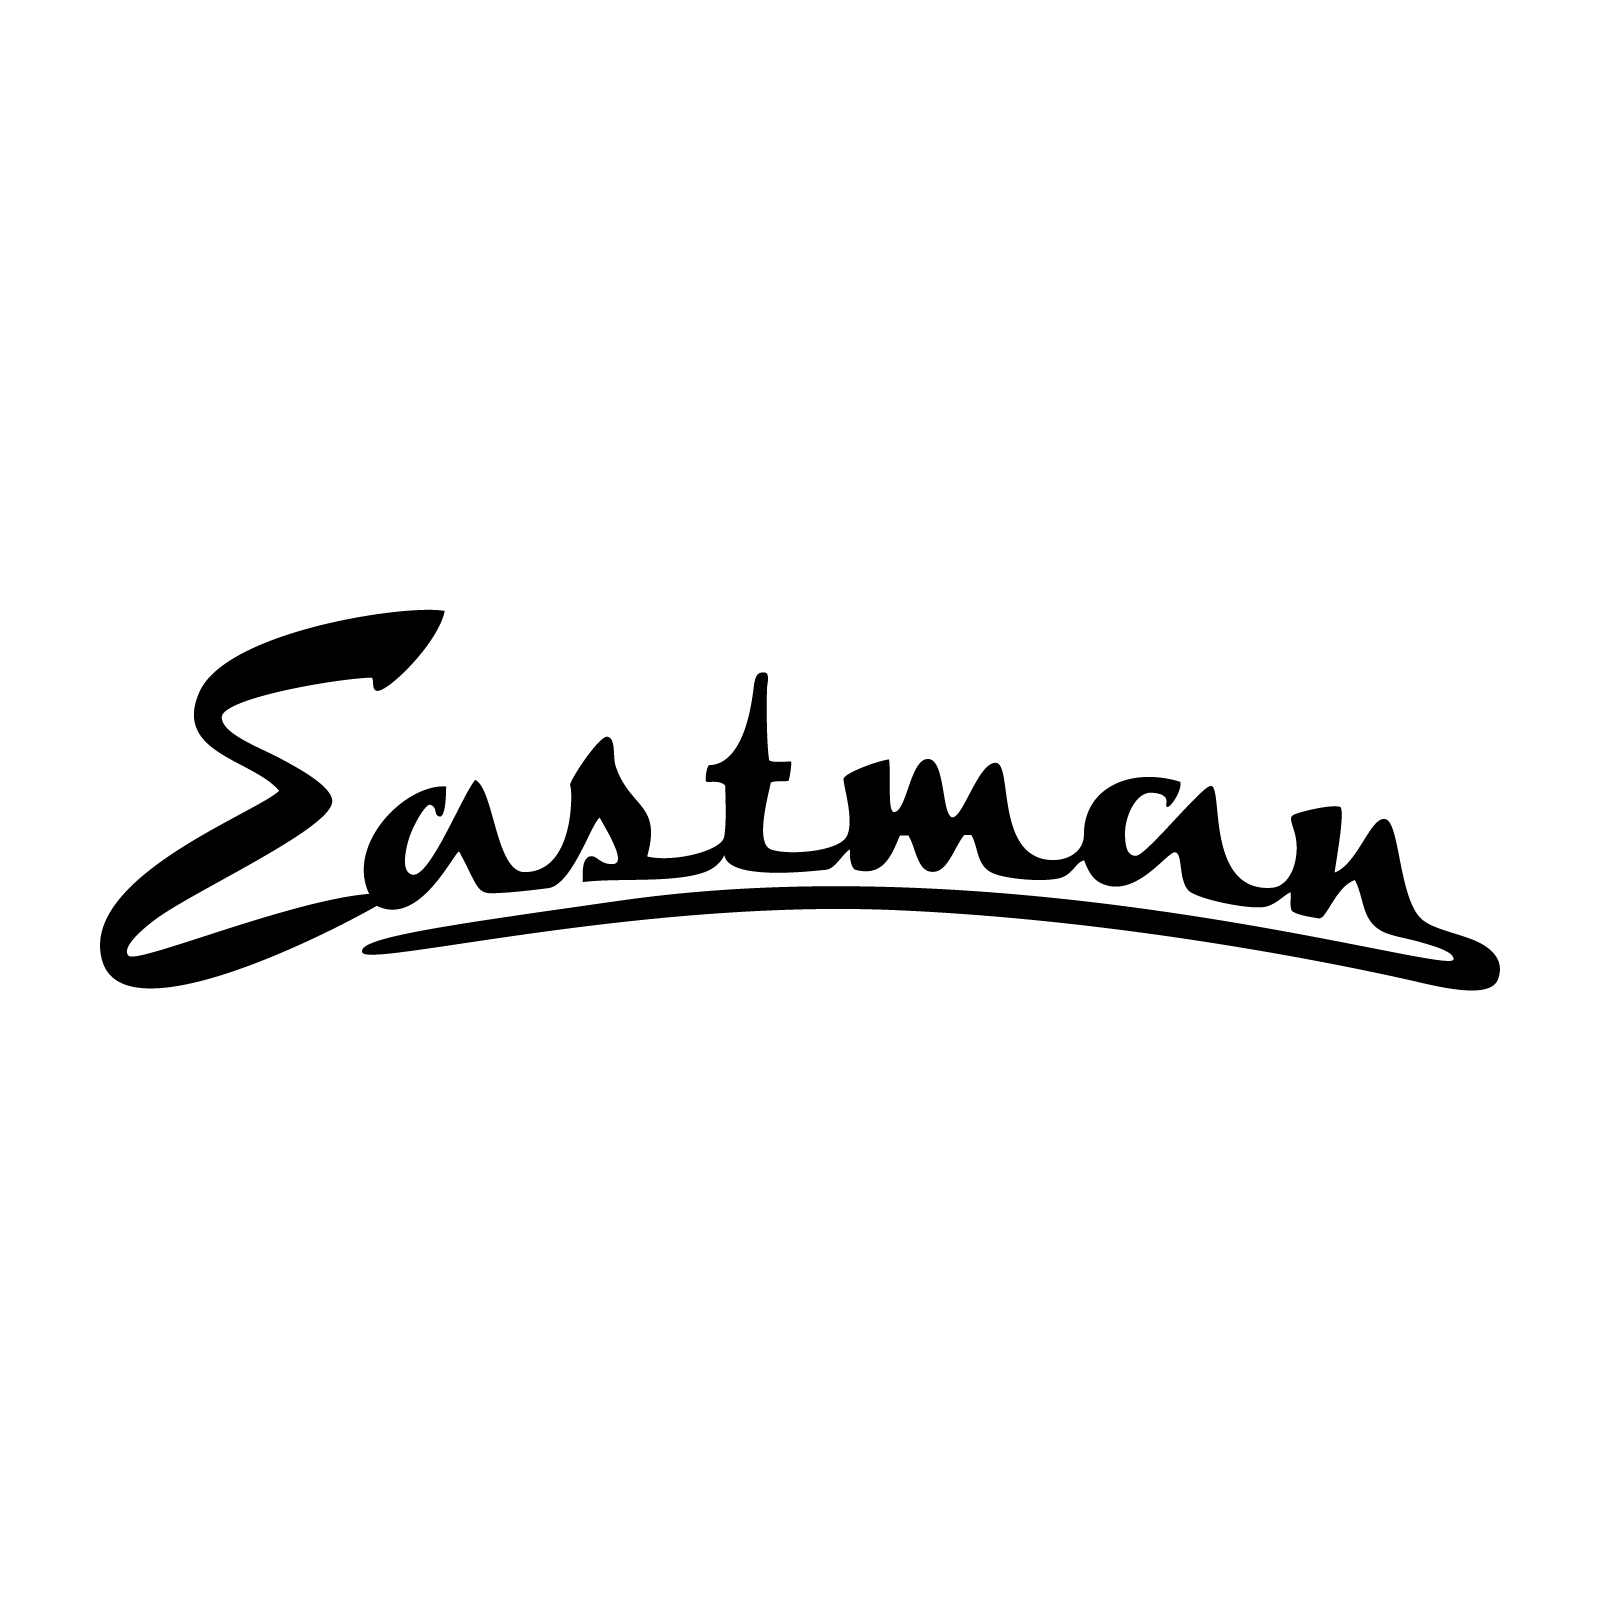 Eastman logo -- image coming soon